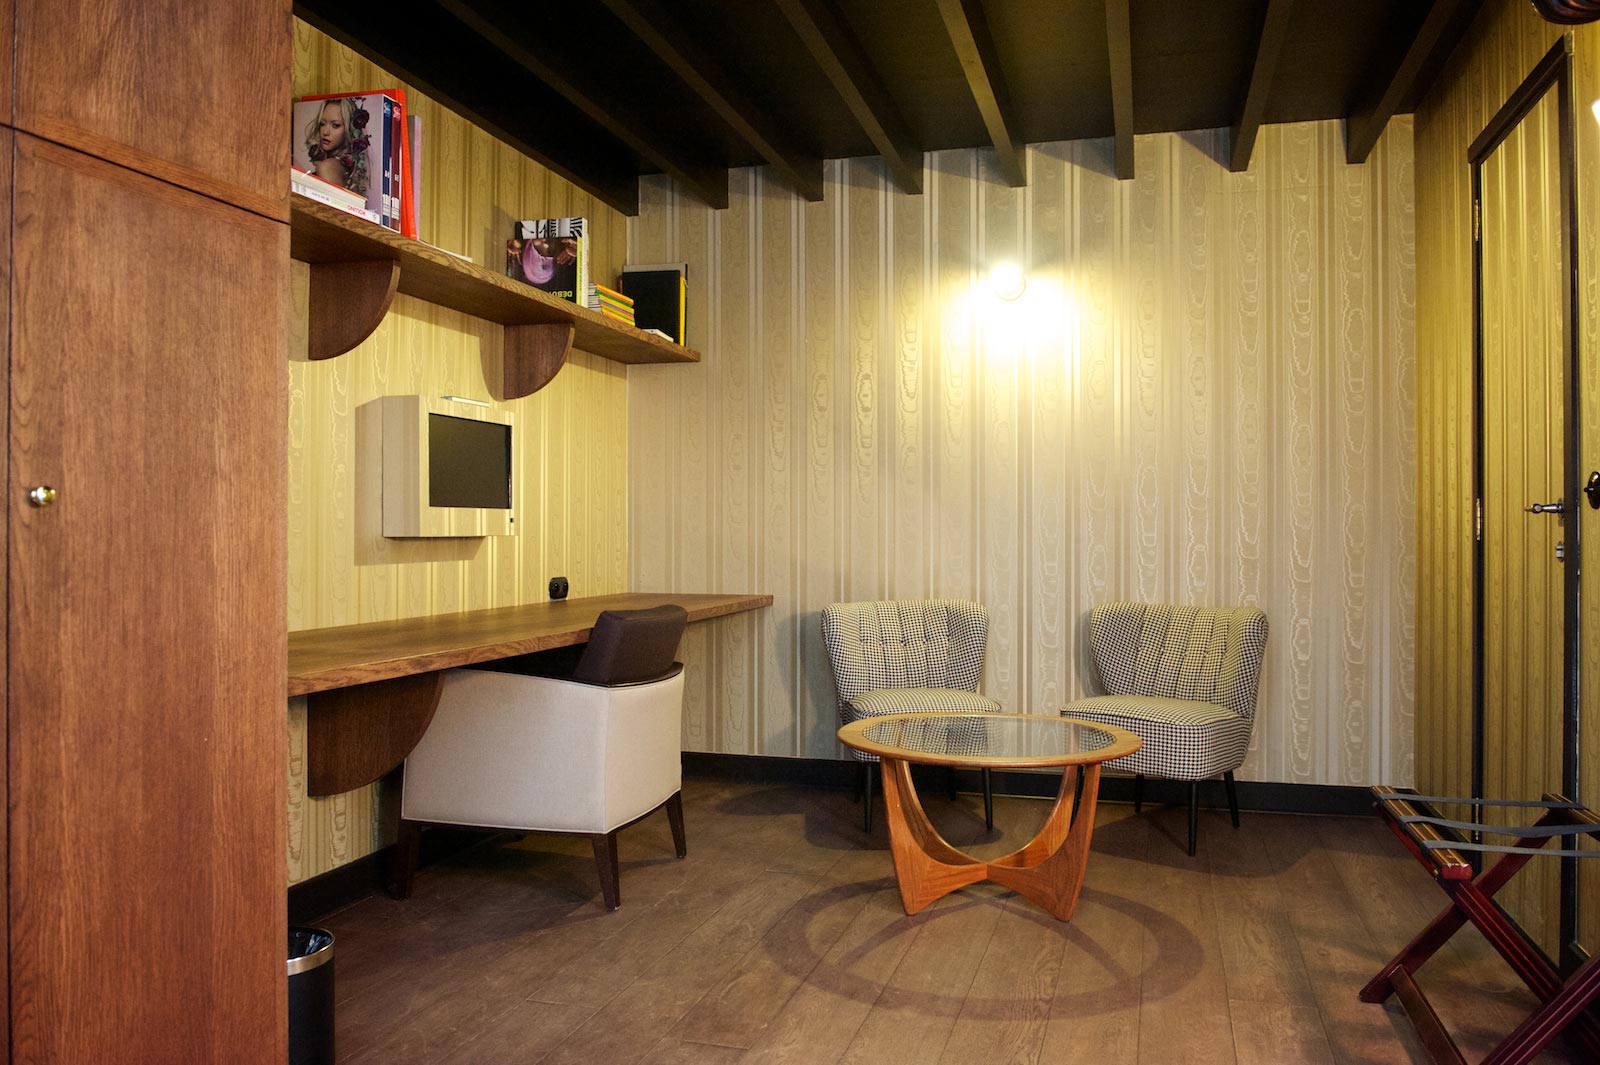  Hotel Le Berger&nbsp;   Comfort Mezzanine    BOOK A ROOM  